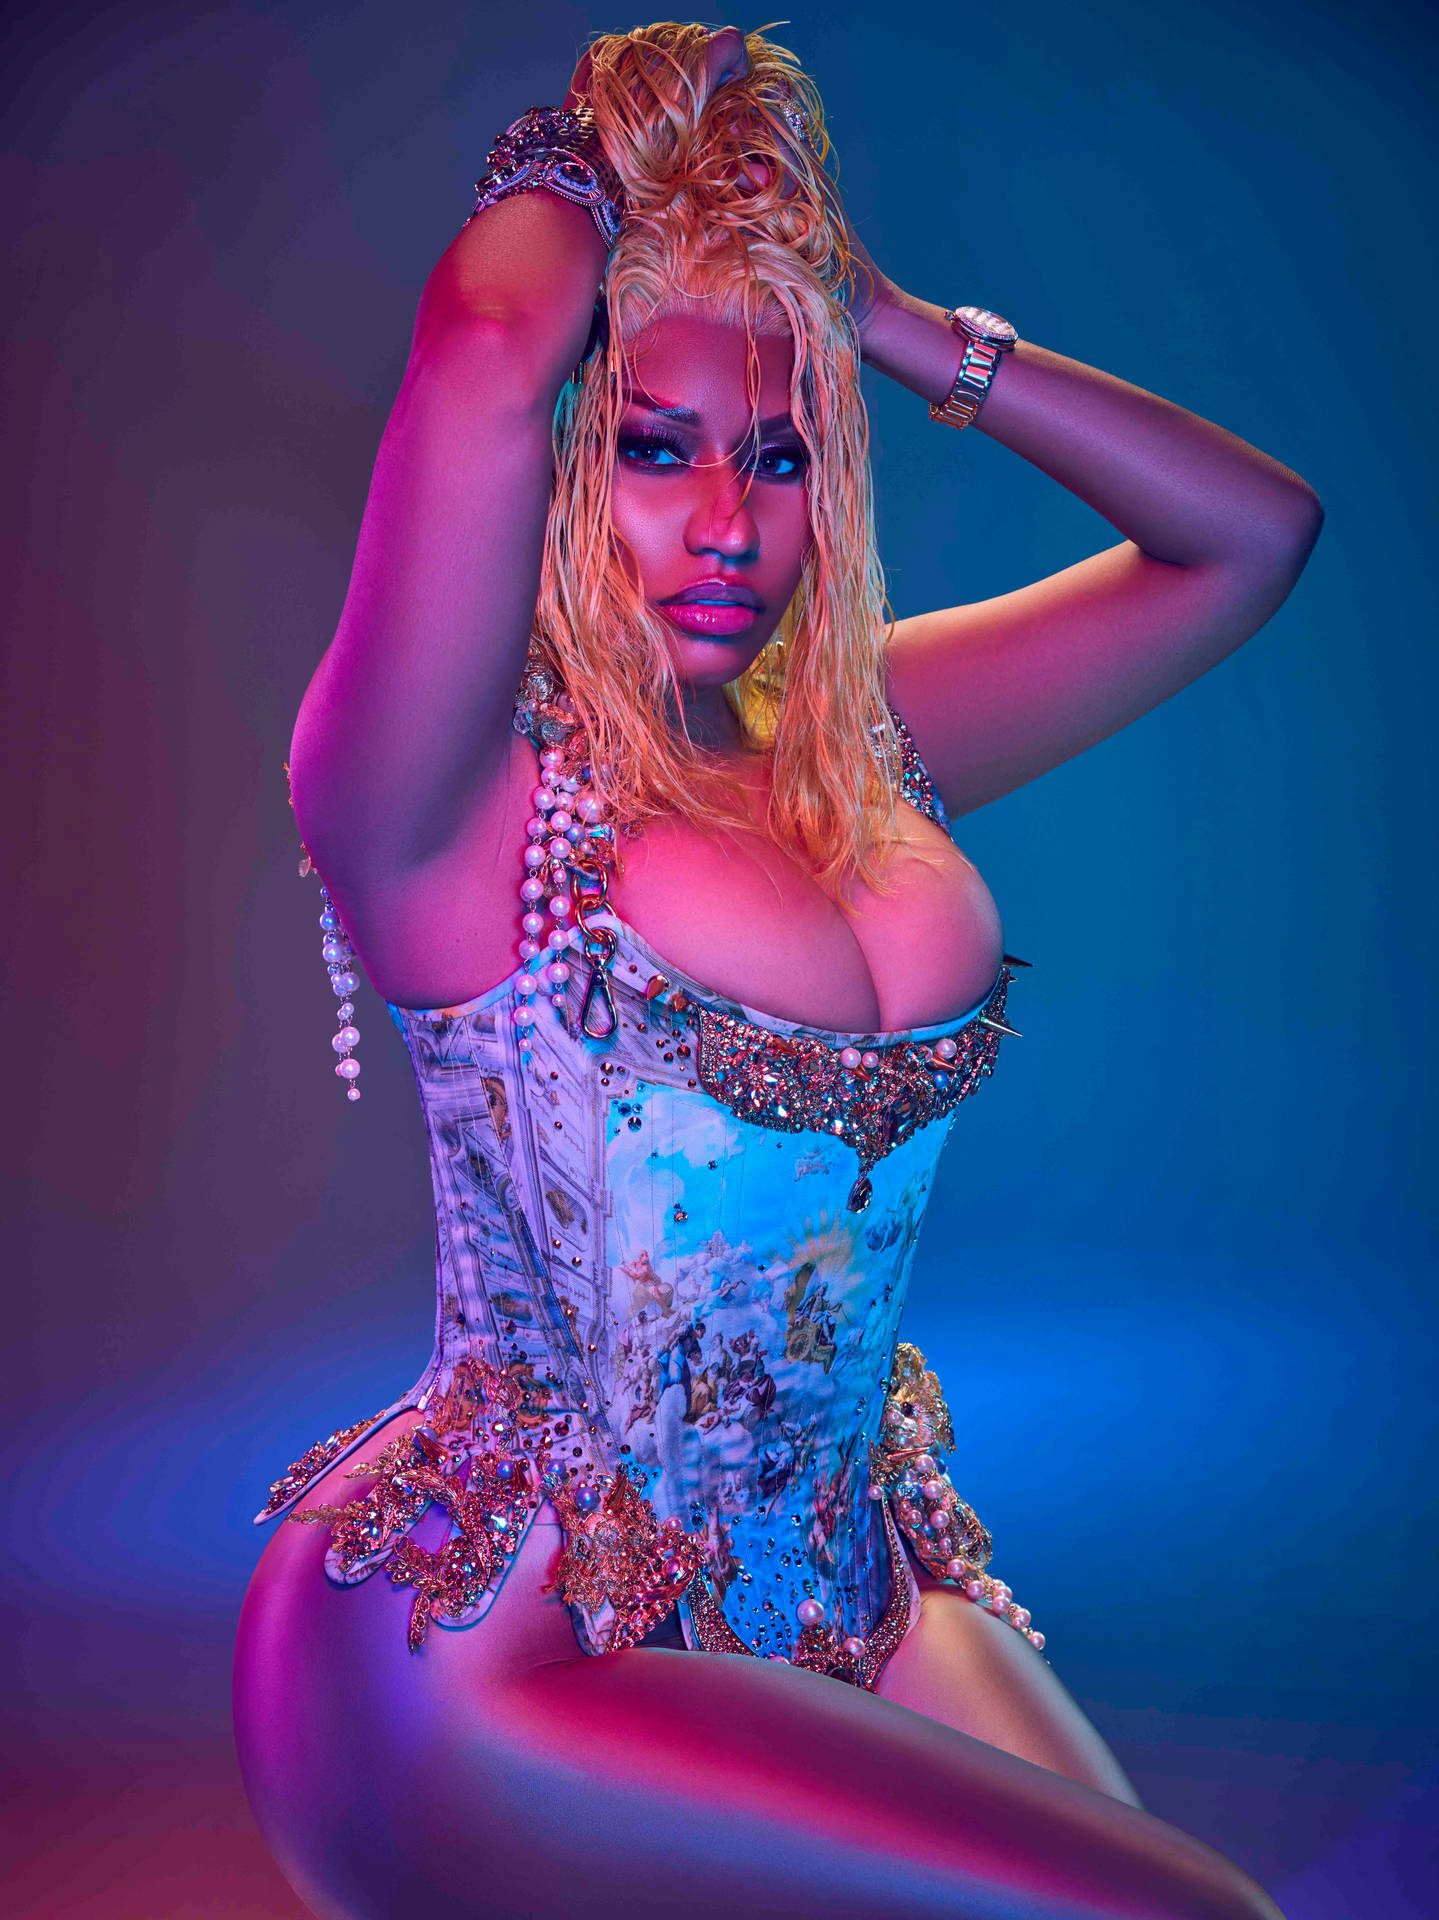 Pinkund Blau Nicki Minaj Hd Wallpaper